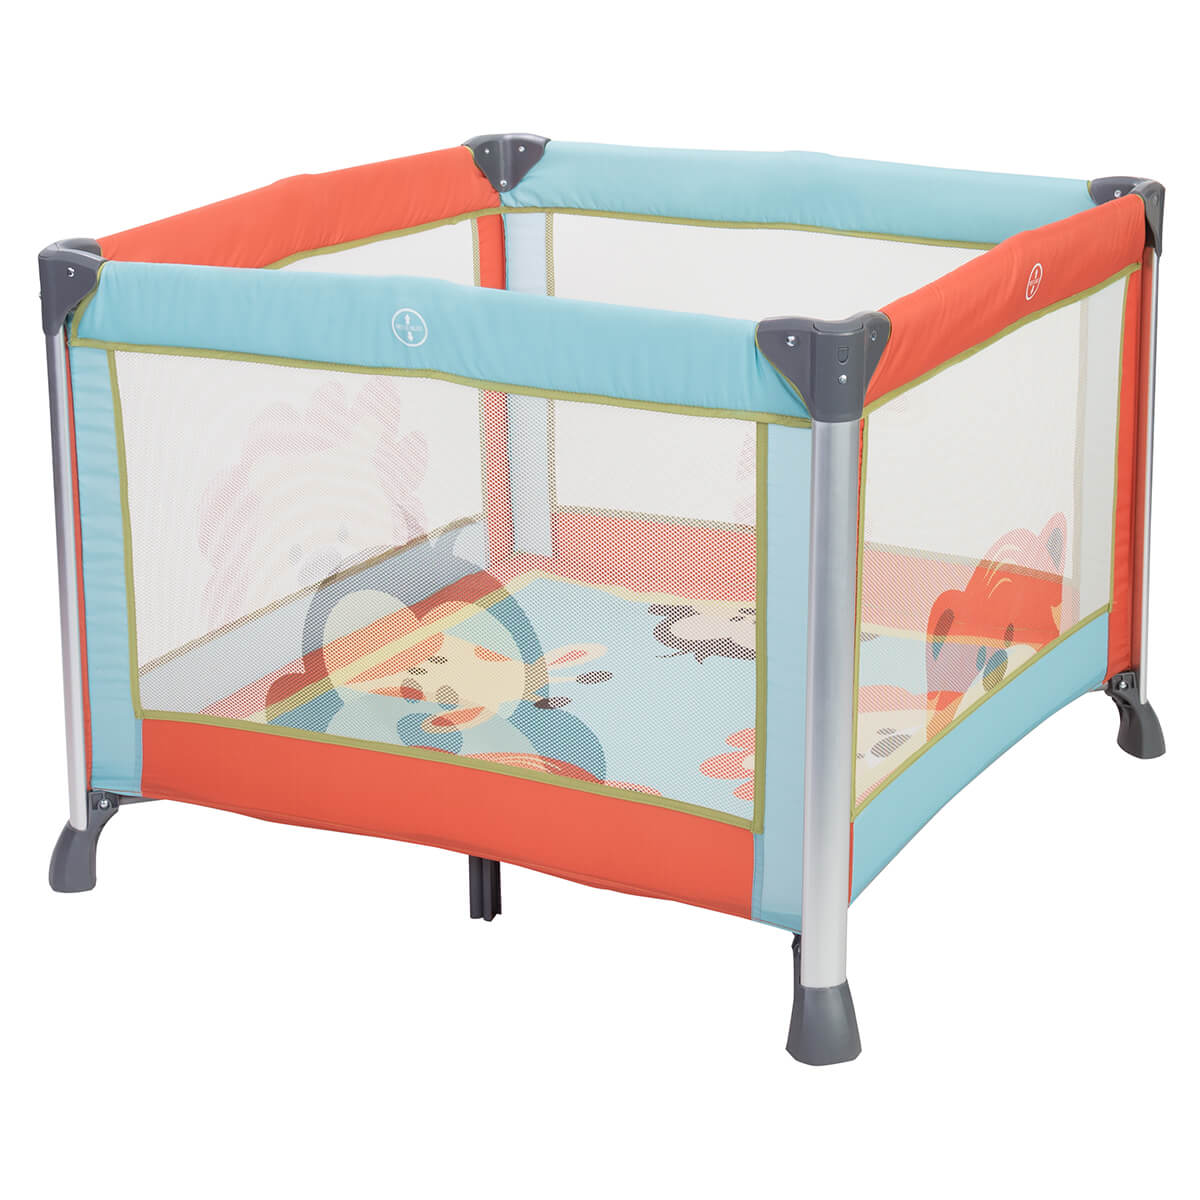 Baby Trend Kid Cube Nursery Center Playard, Peek-a-boo Pals